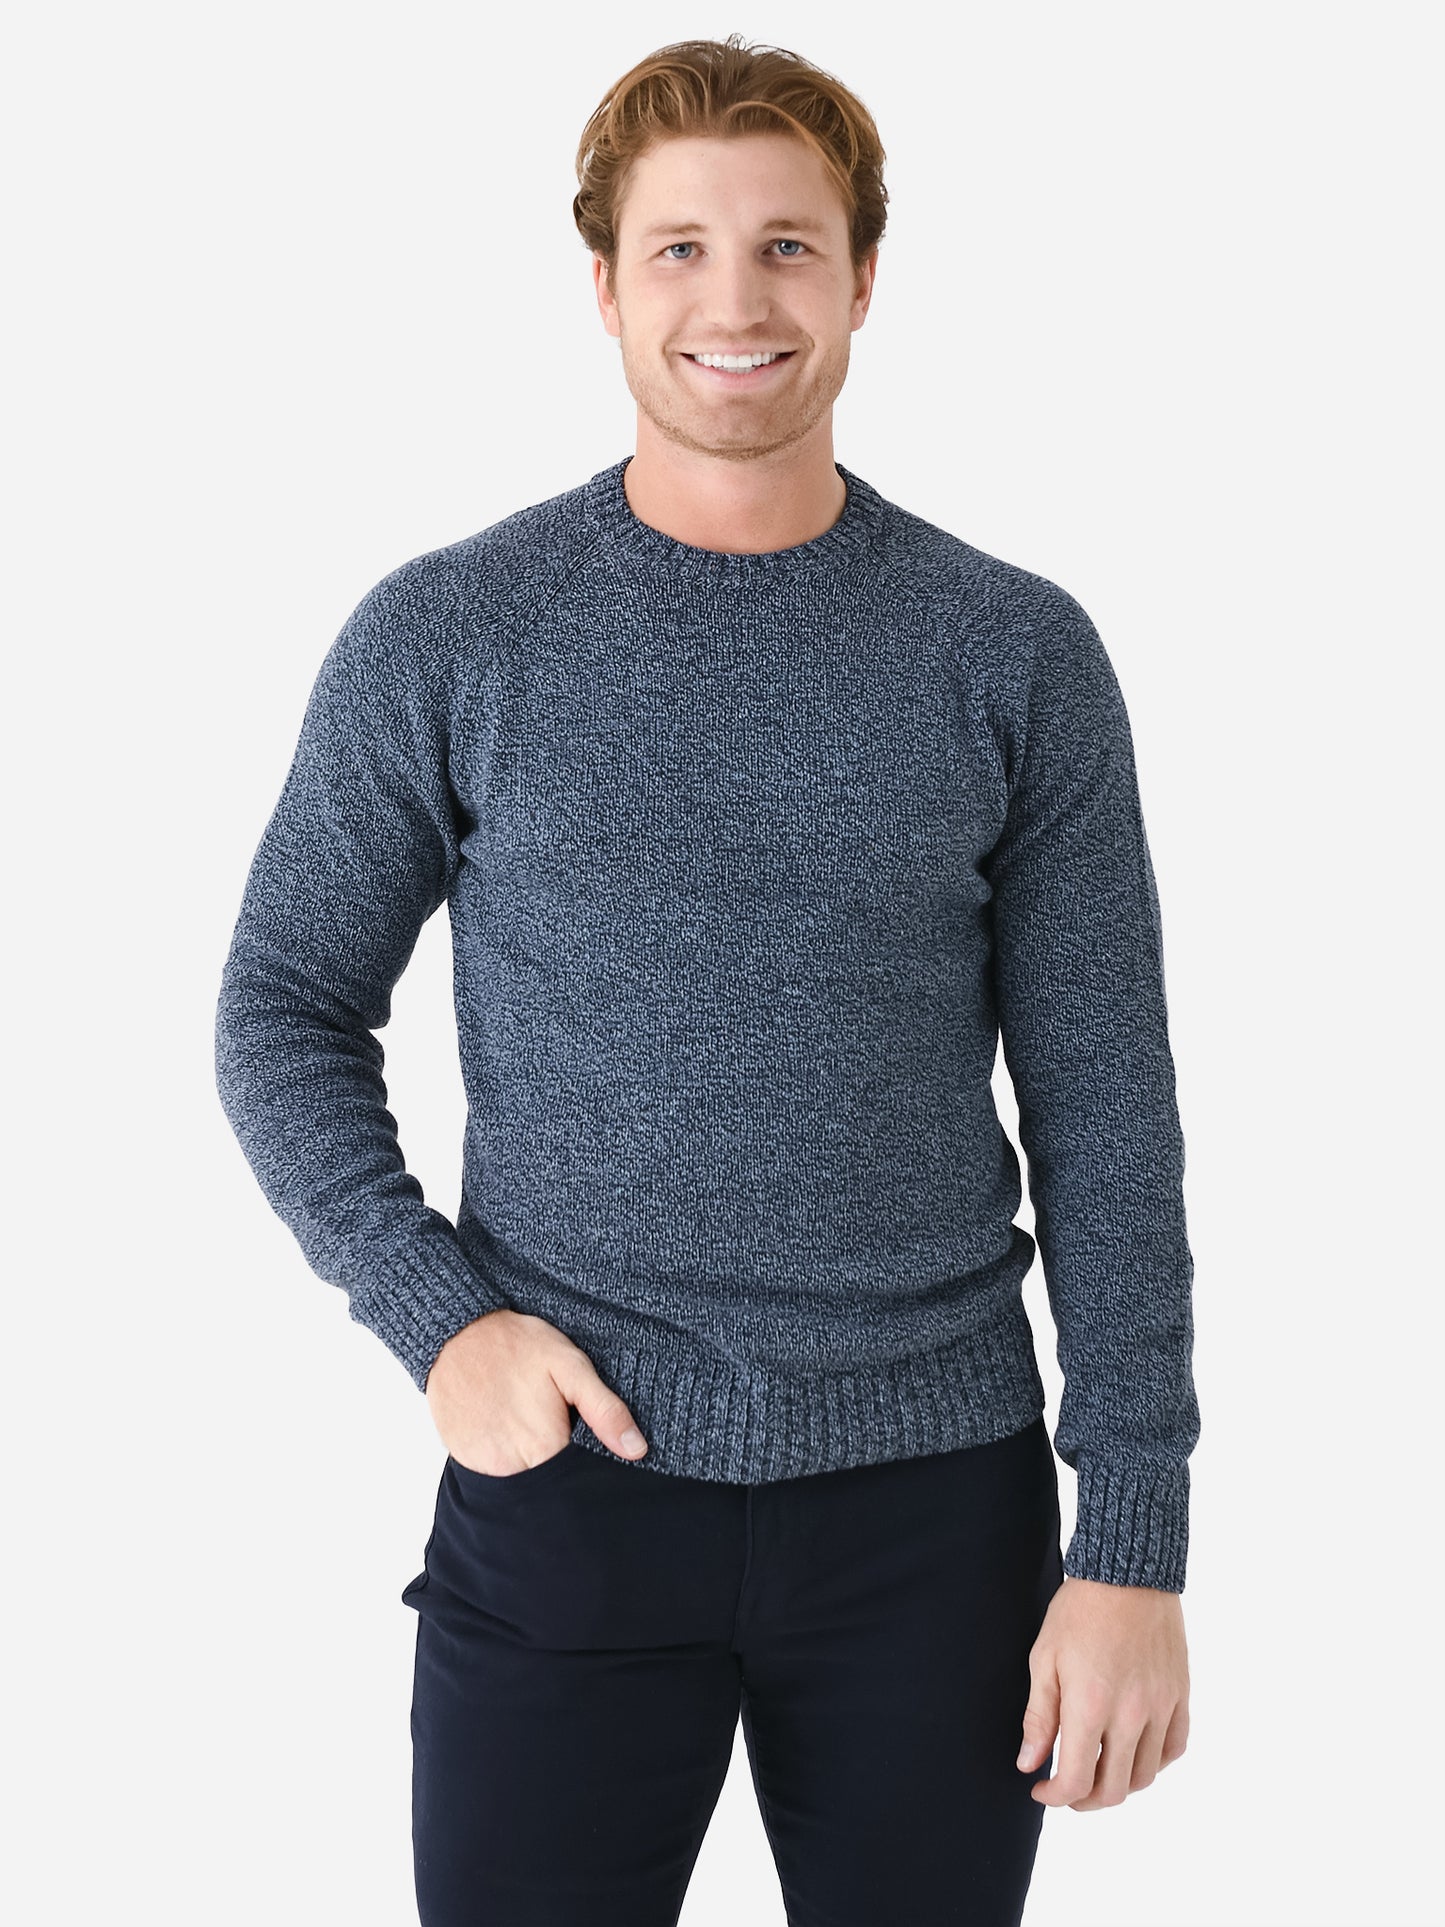 Outerknown Men's Hemisphere Sweater